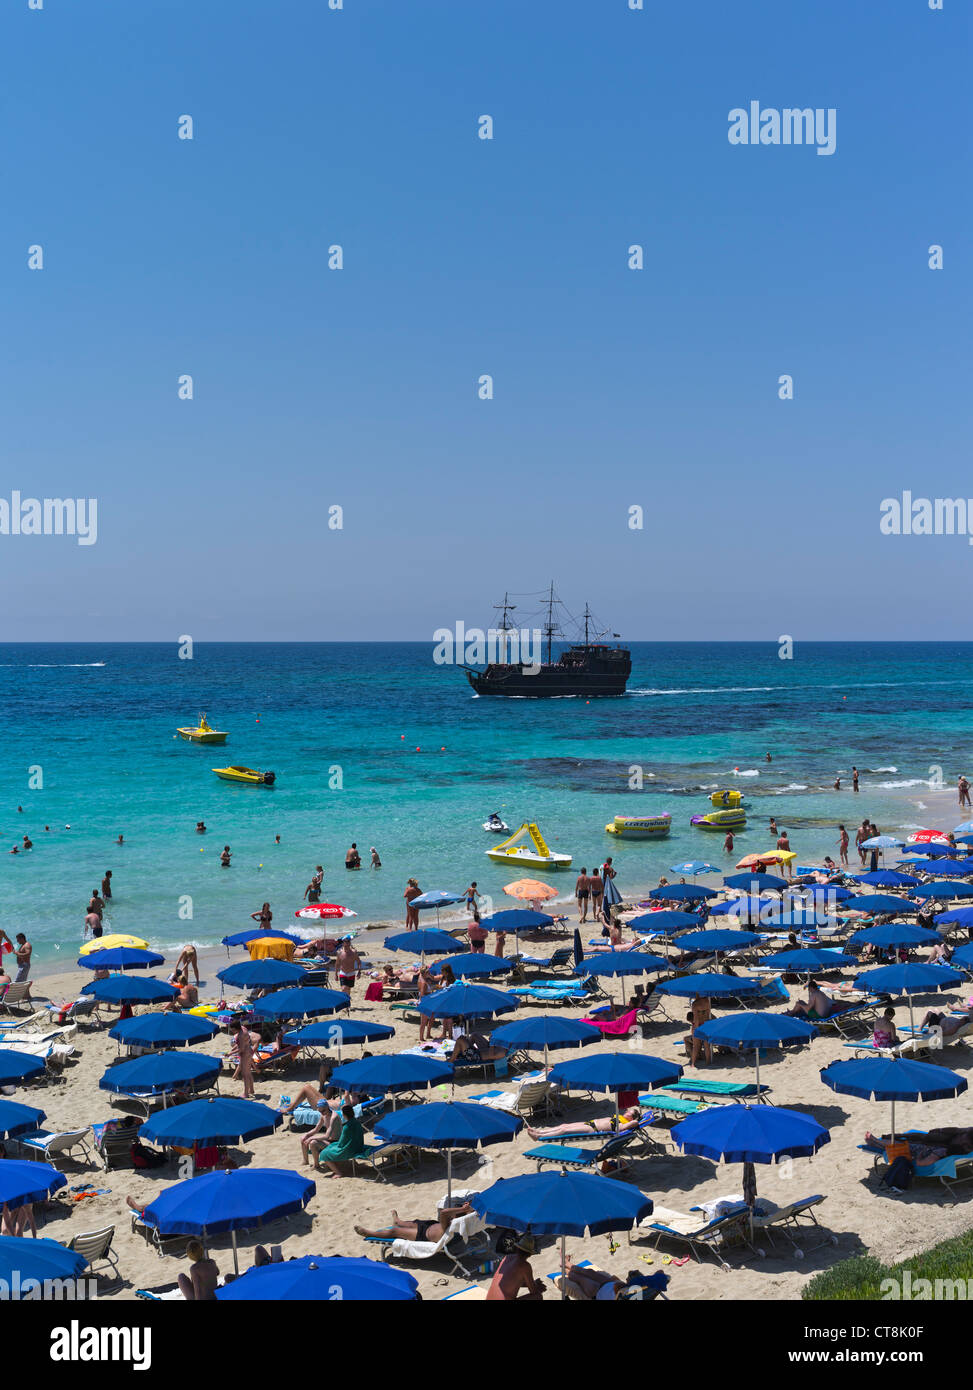 dh Grecian Bay AYIA NAPA CYPRUS Black Pearl Pirate ship Sun umbrellas sand beach sunbathers and swimmers greece island beaches Stock Photo